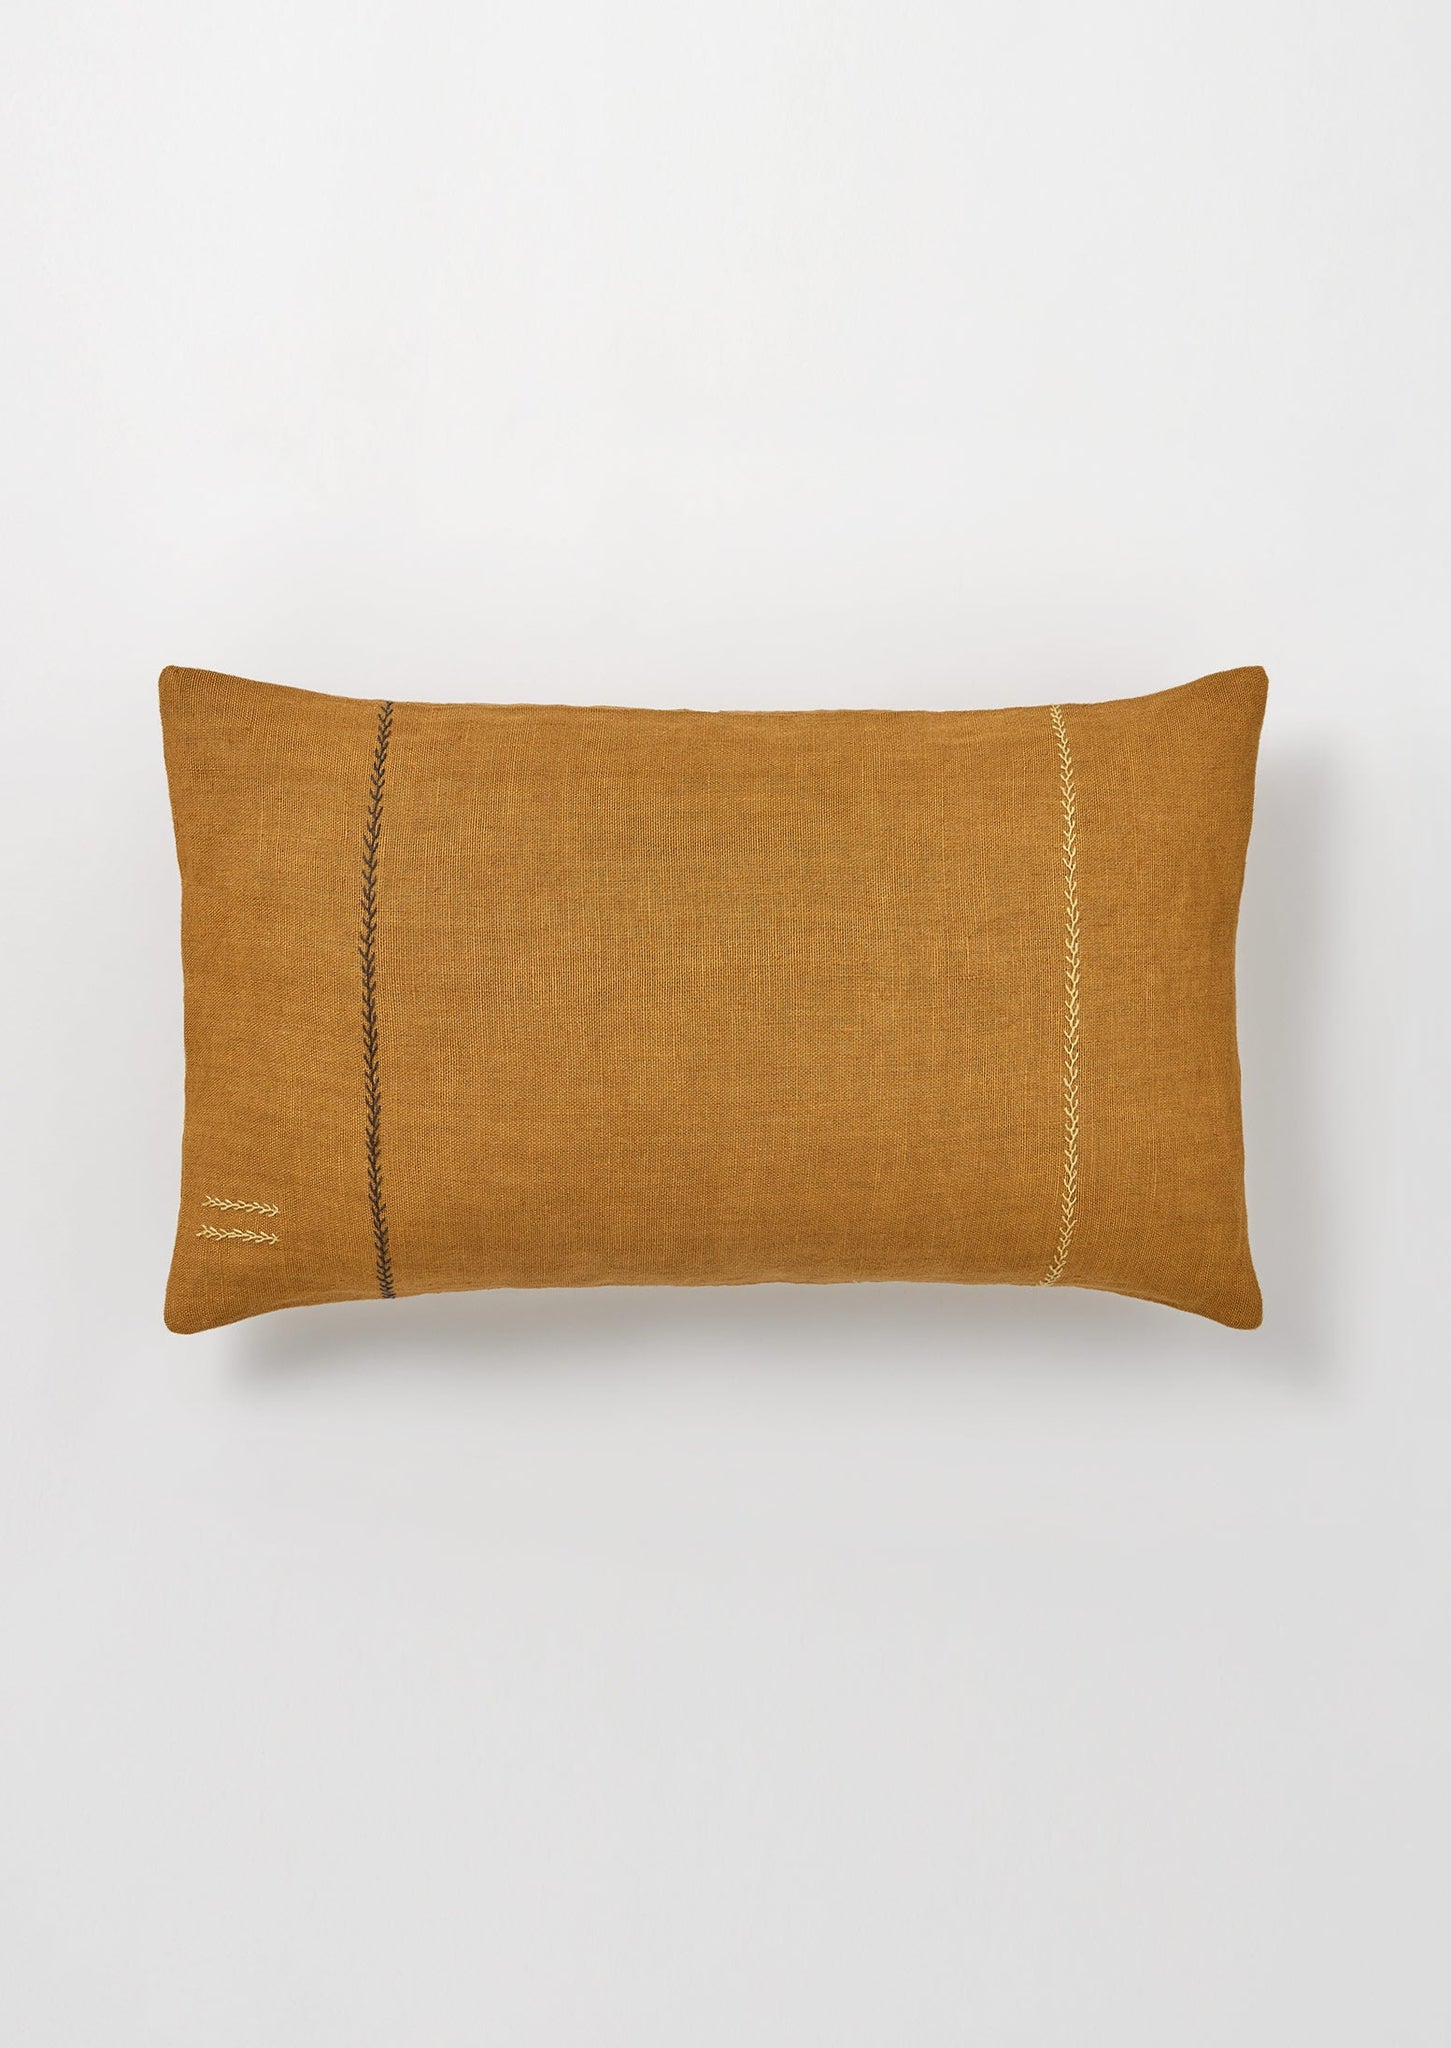 Rectangular Herringbone Embroidered Cushion Cover | Caramel